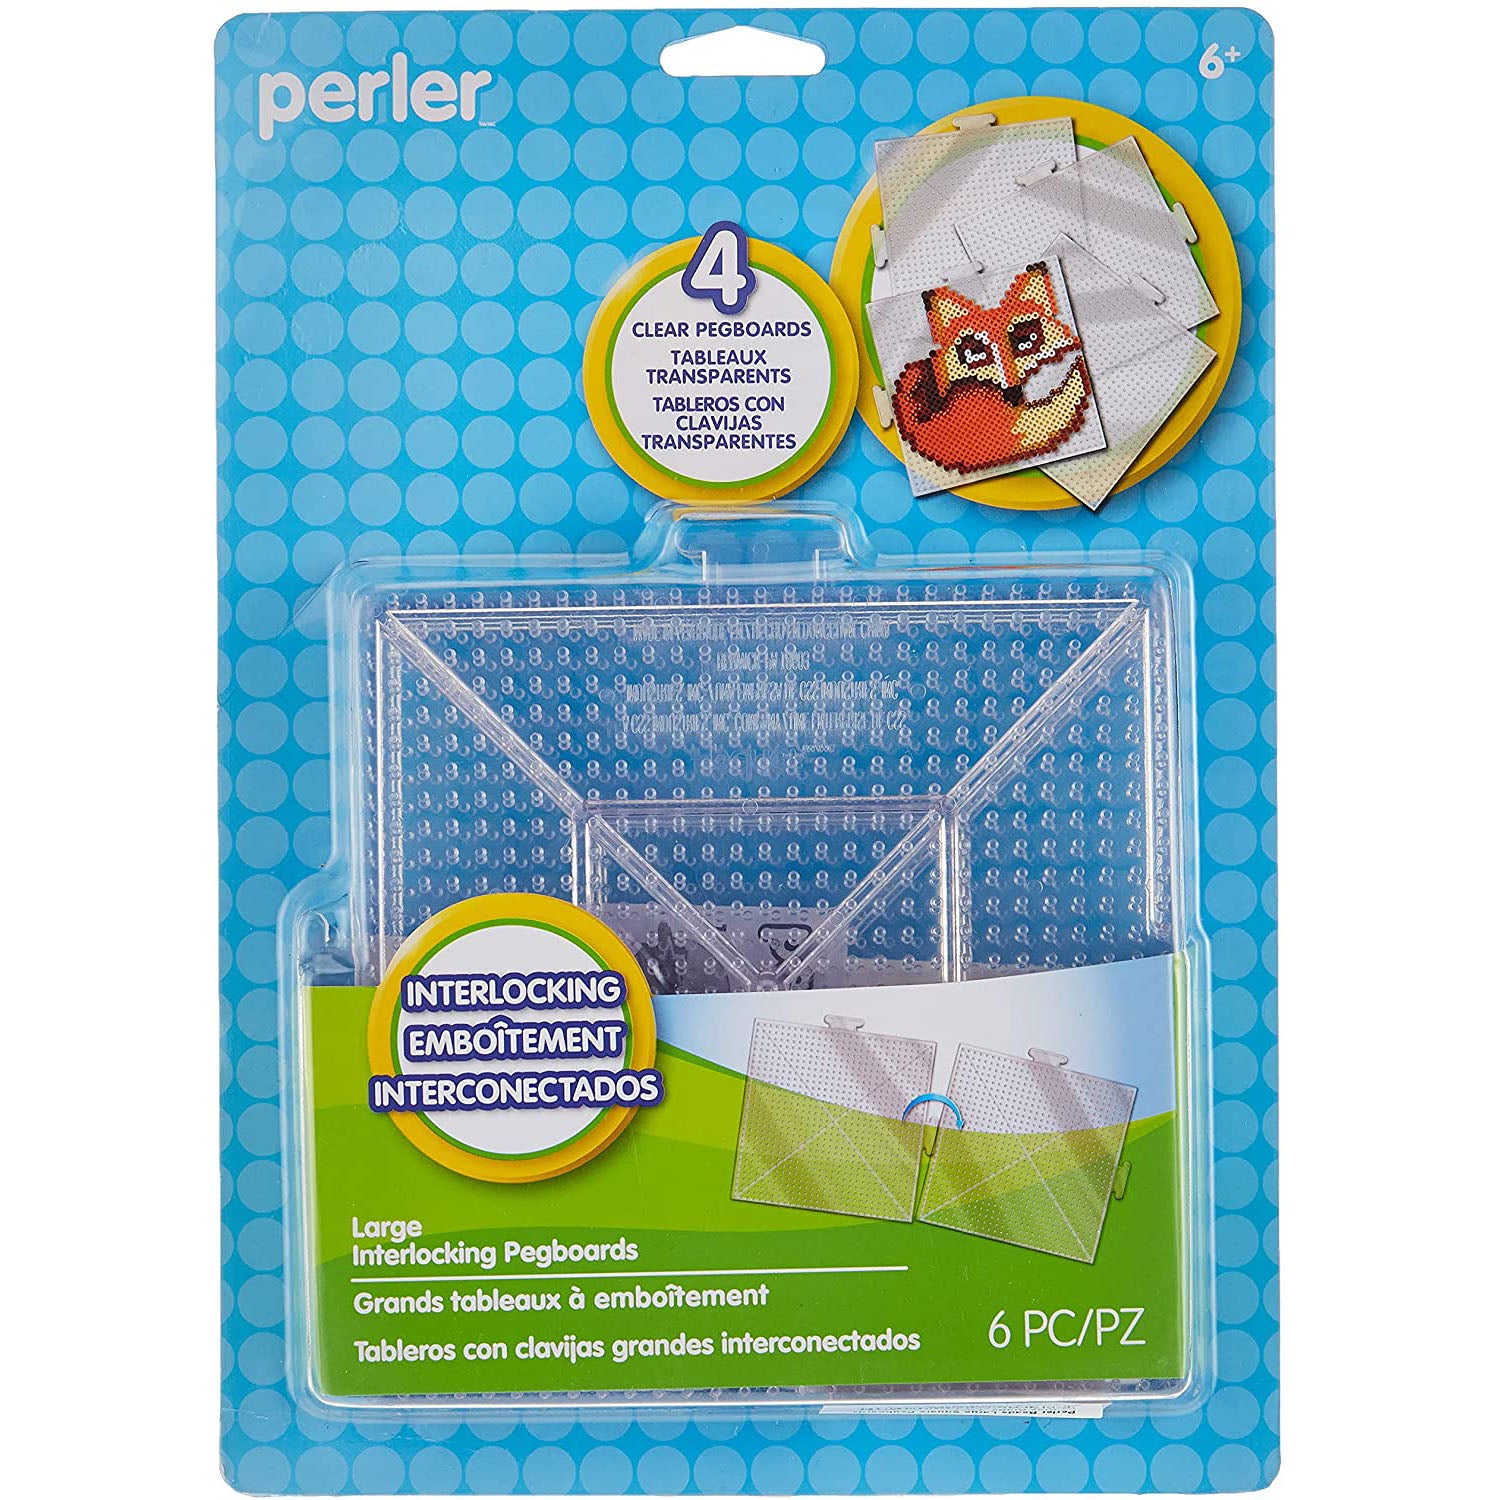 Perler Mini Beads Small Pegboards - Kandi Pad  Kandi Patterns, Fuse Bead  Patterns, Pony Bead Patterns, AI-Driven Designs